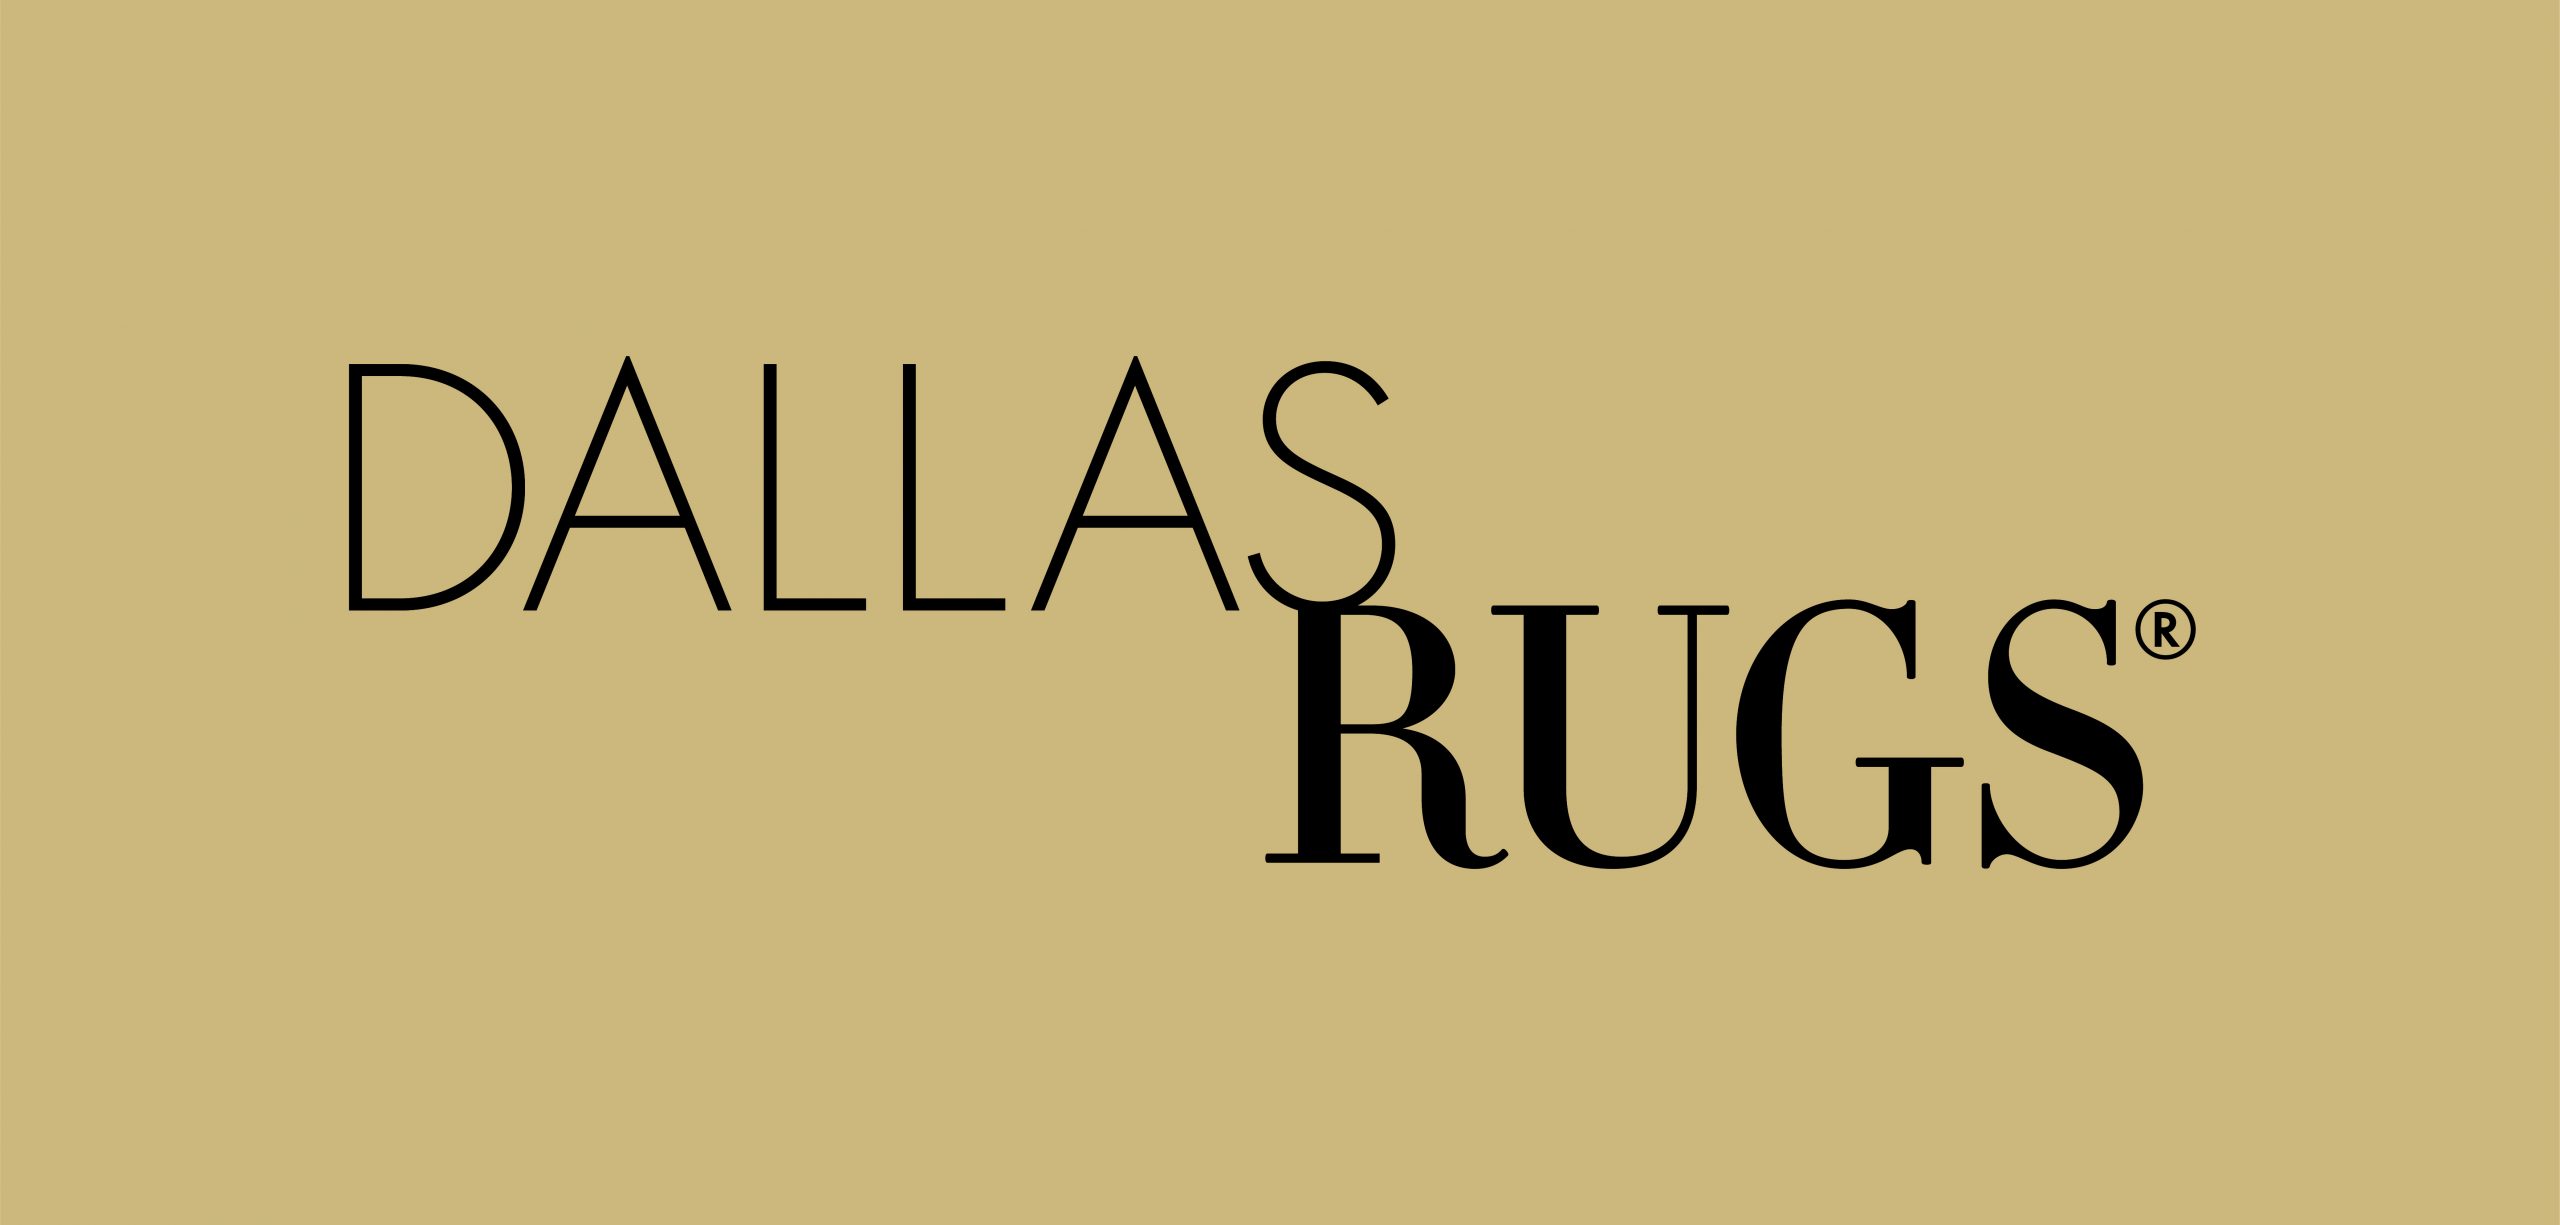 https://www.dallasrugs.com/wp-content/uploads/2021/04/Dallas-Rugs-LOGO-scaled.jpg